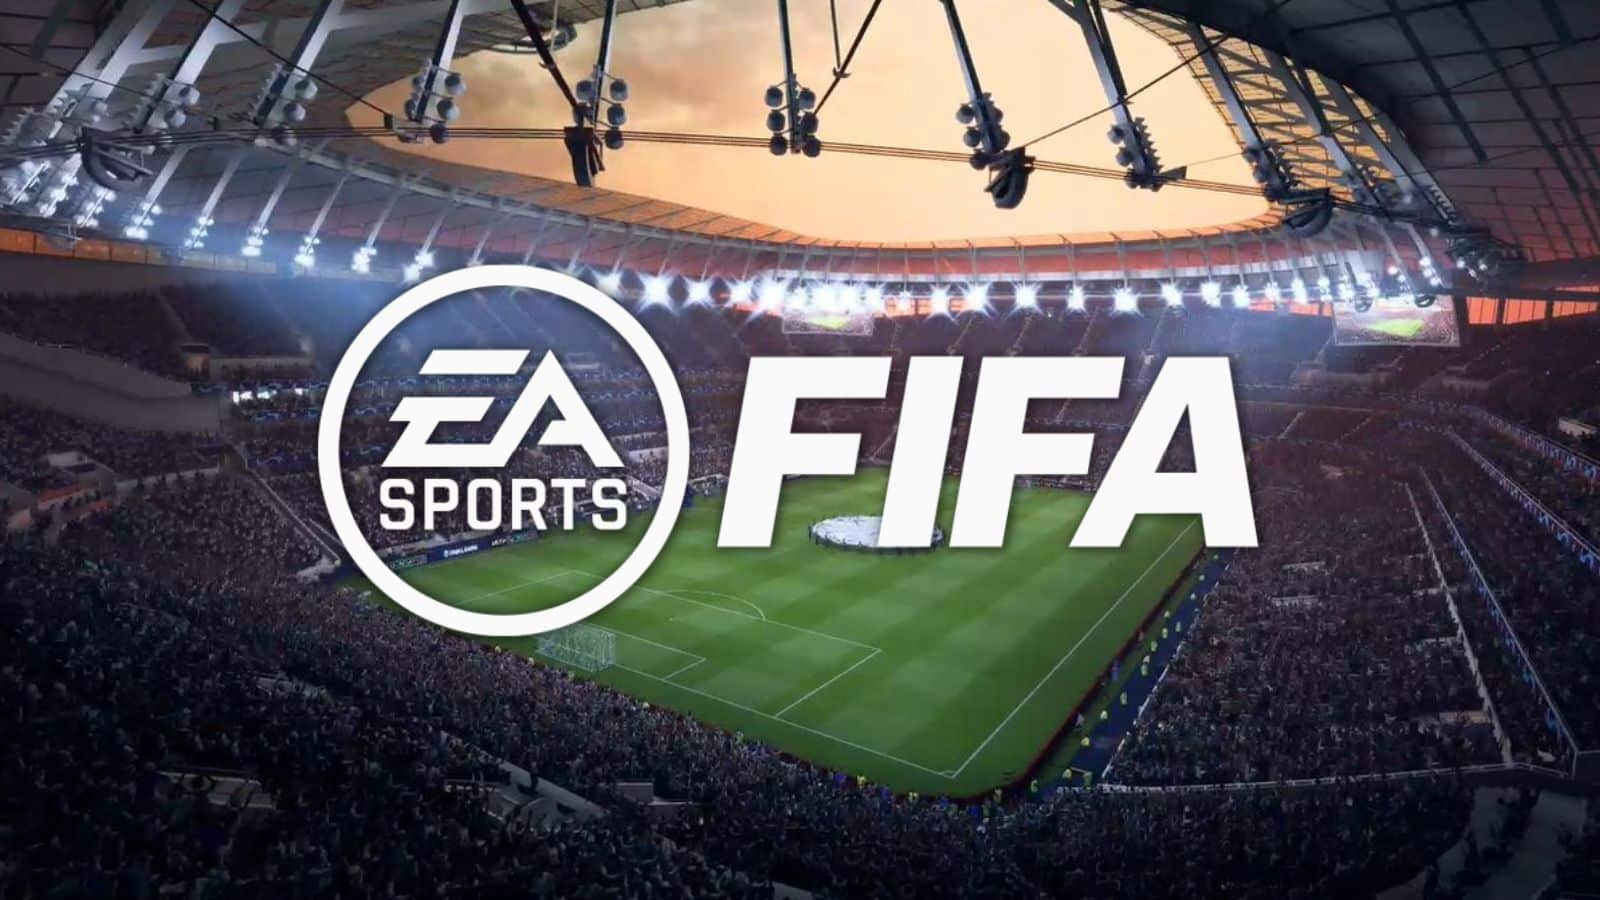 FIFA 23 community TOTS: How to vote, nominees, more - Dexerto